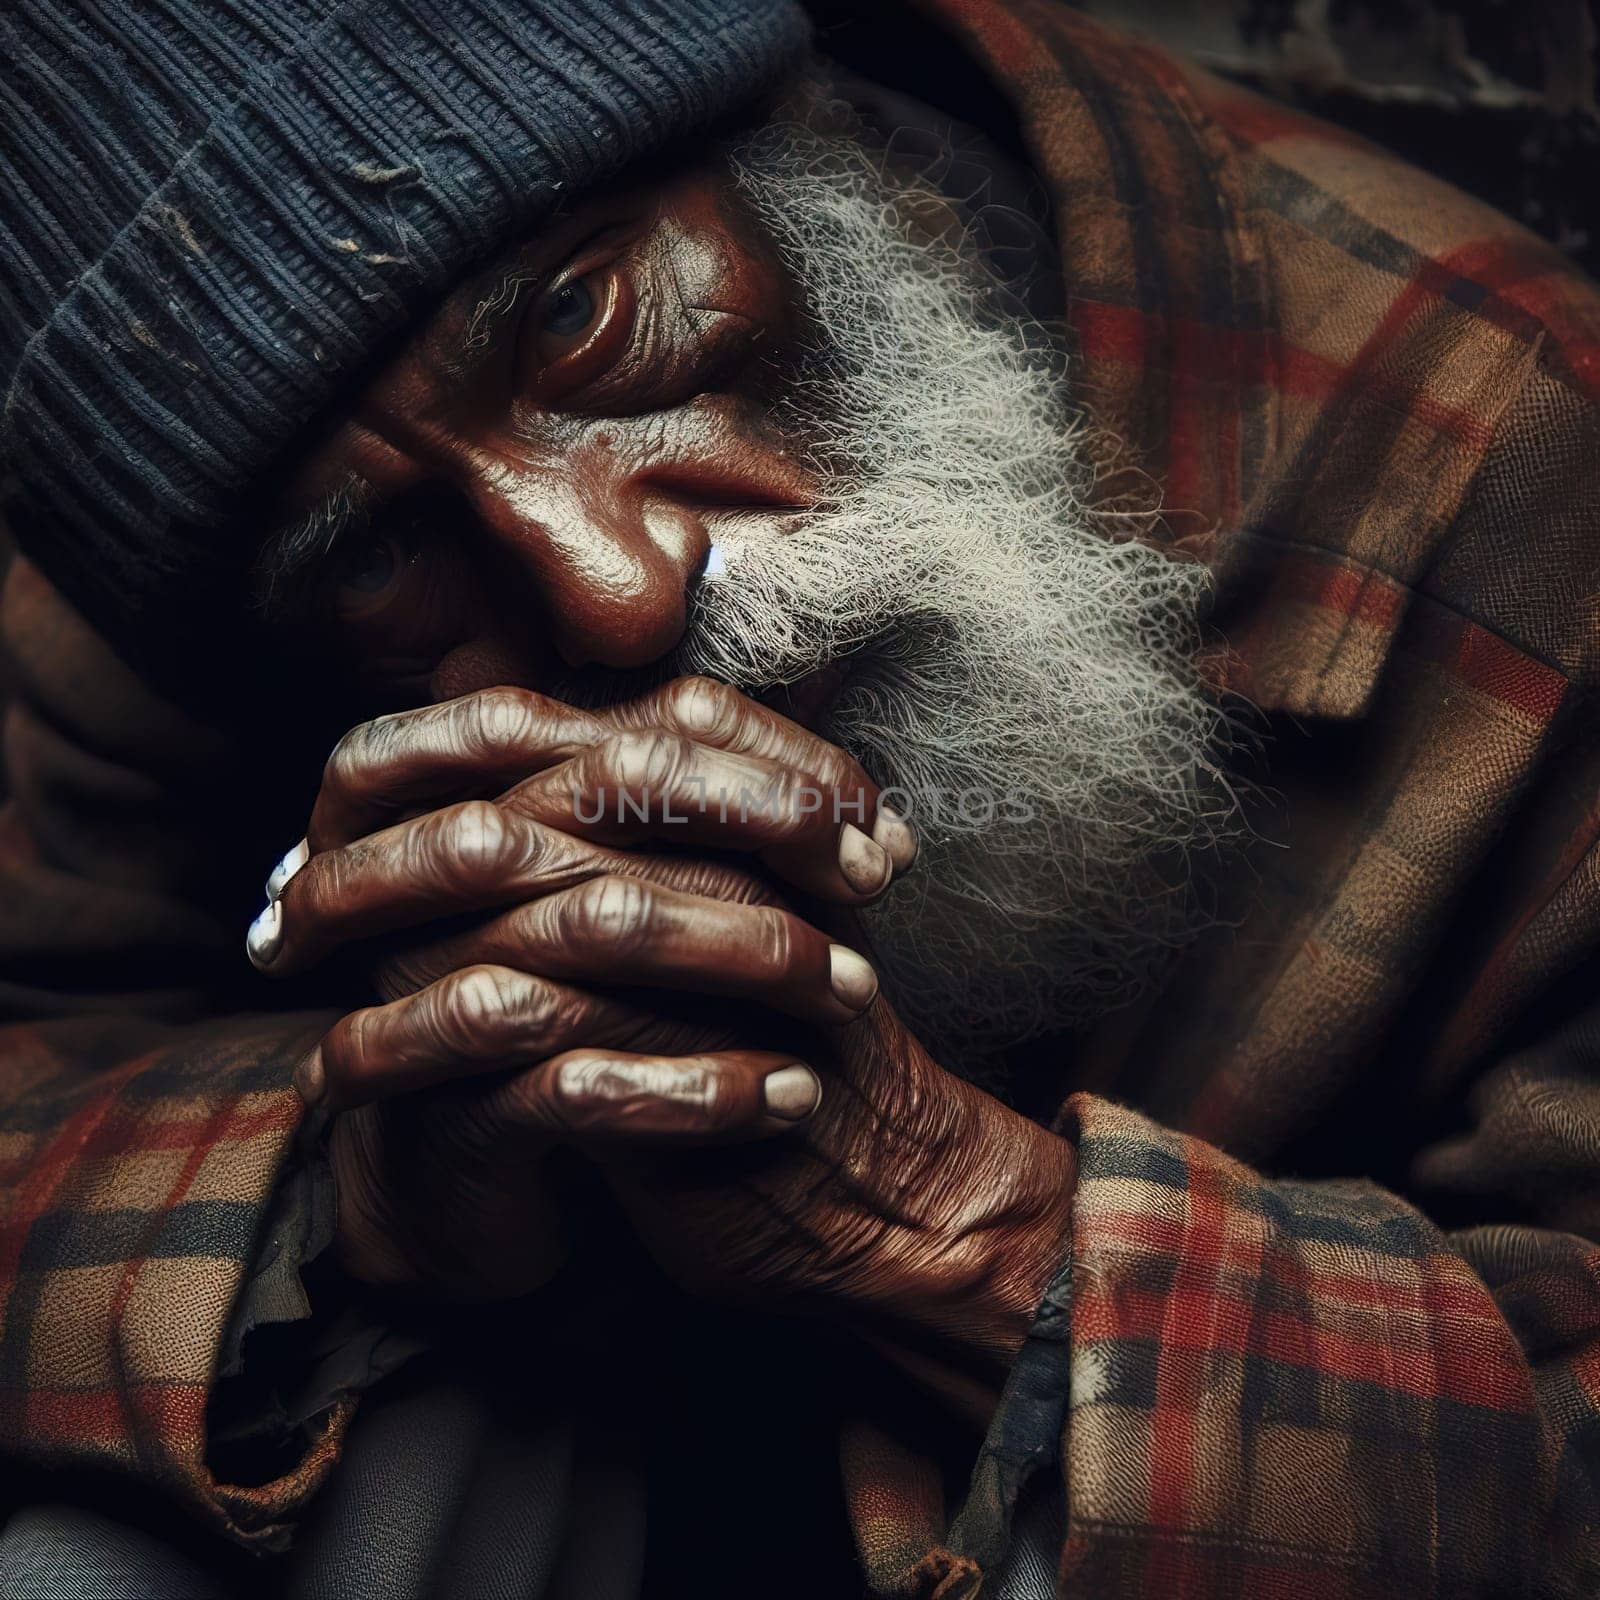 Homeless man at the train station. generative, AI. B/W, generative, AI. High quality illustration